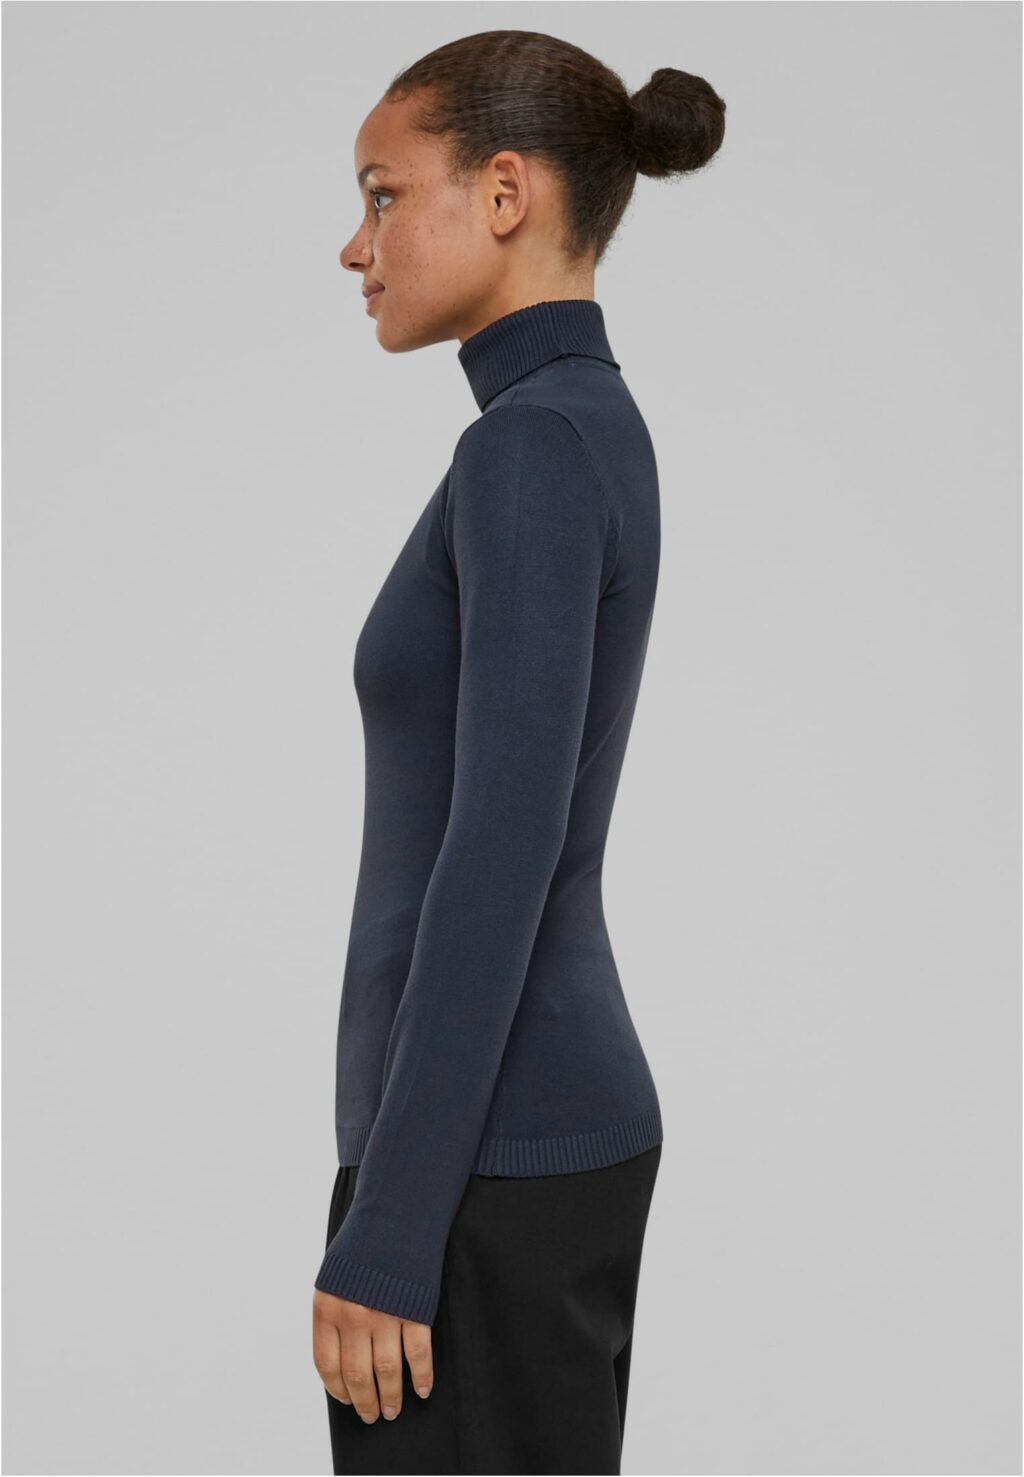 Urban Classics Ladies Knitted Turtleneck Sweater navy TB6115